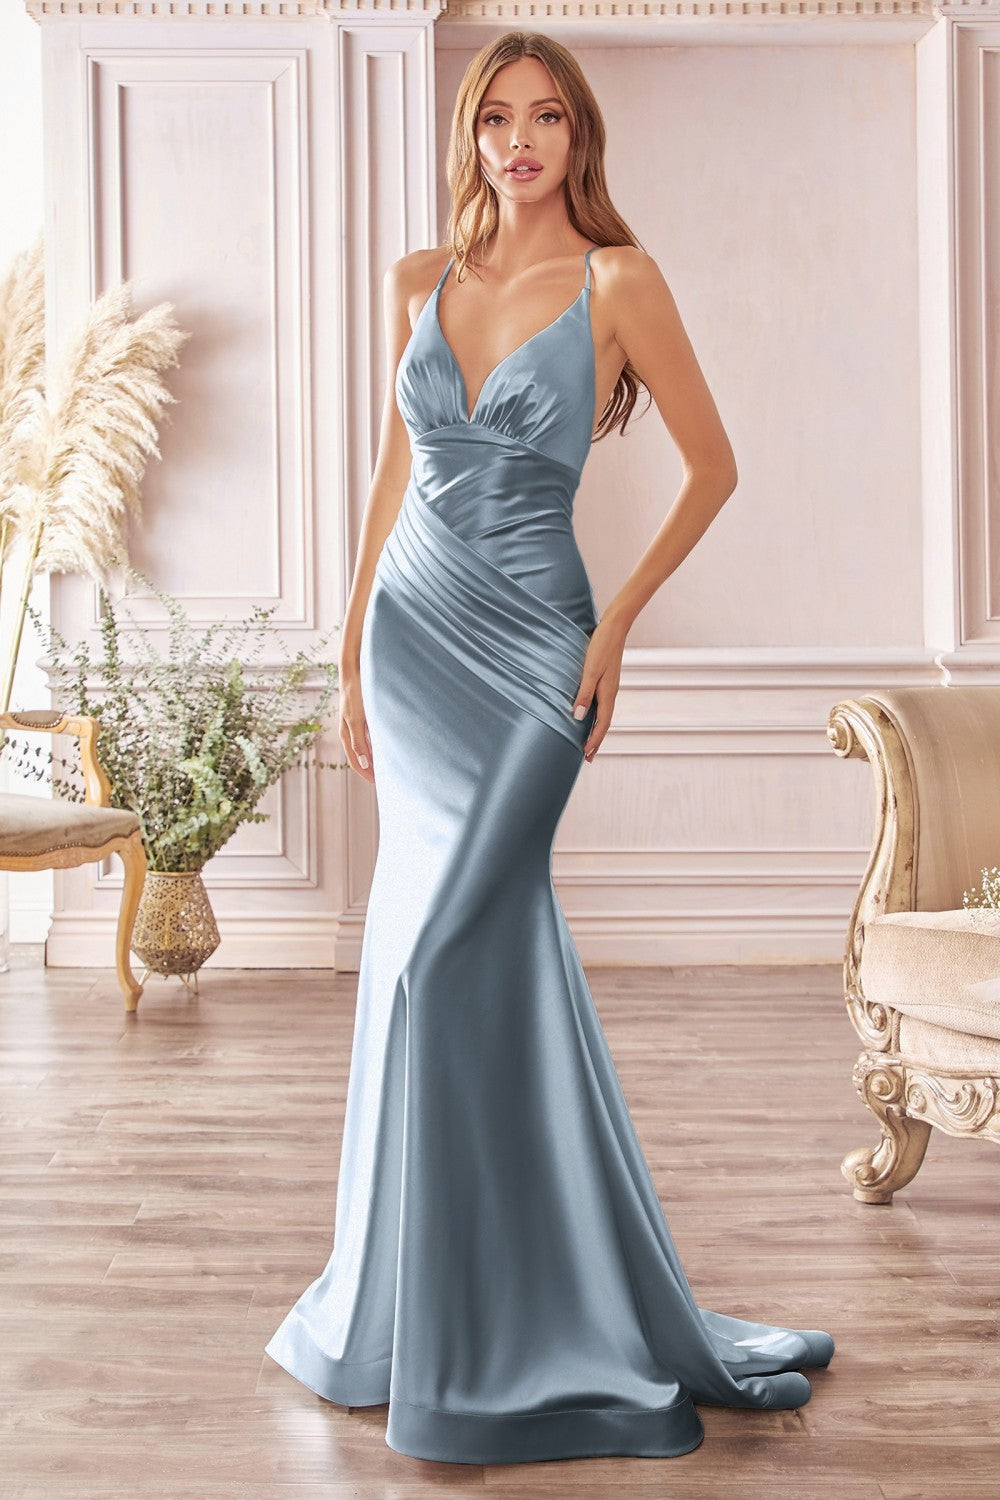 Dusty Blue Maxi Dress - One-Shoulder Dress - Pleated Maxi Dress - Lulus